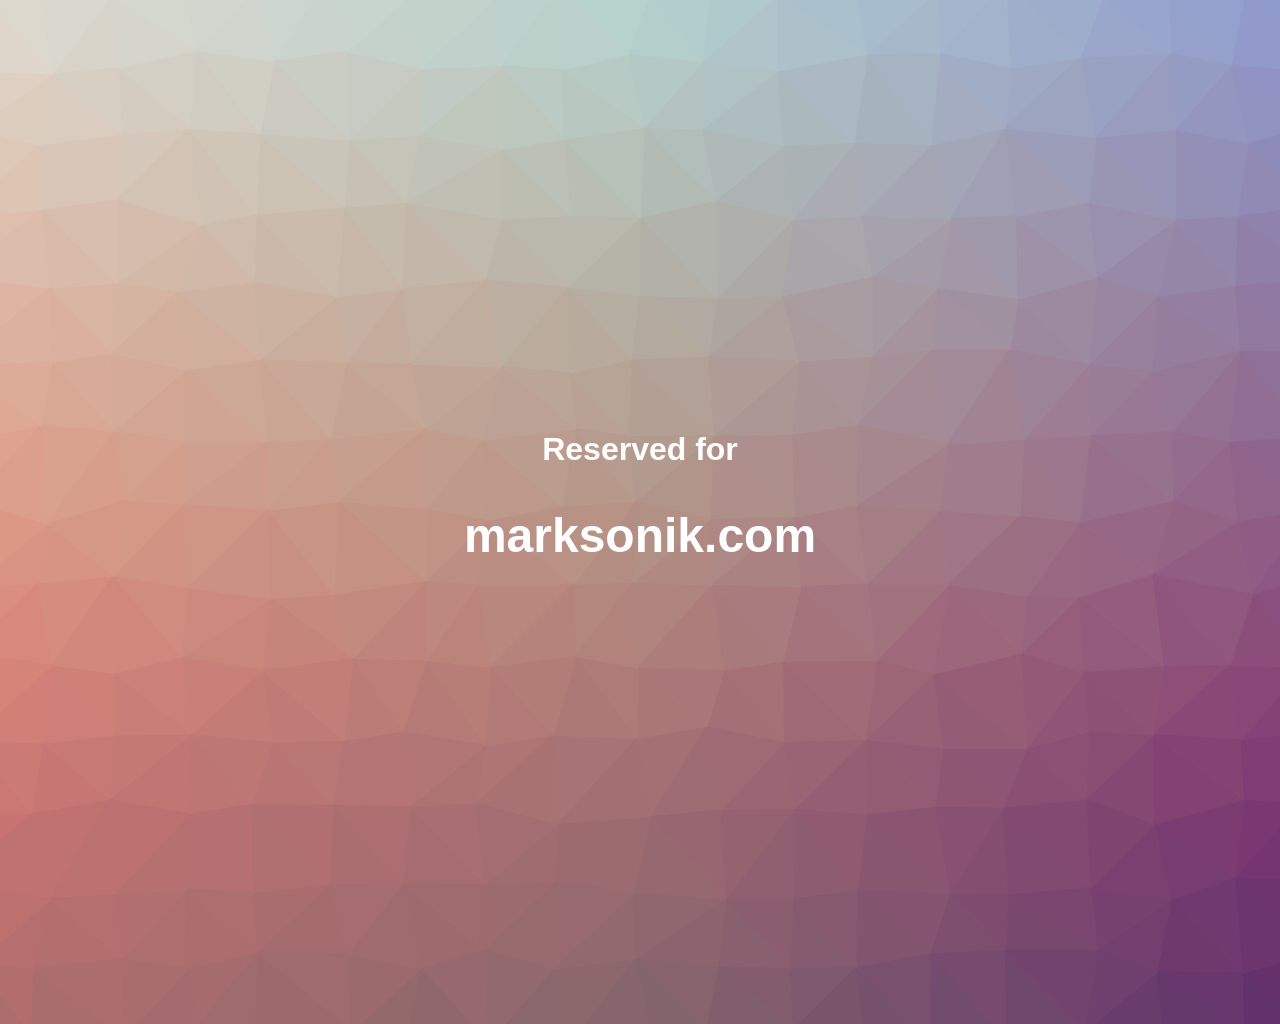 marksonik.com